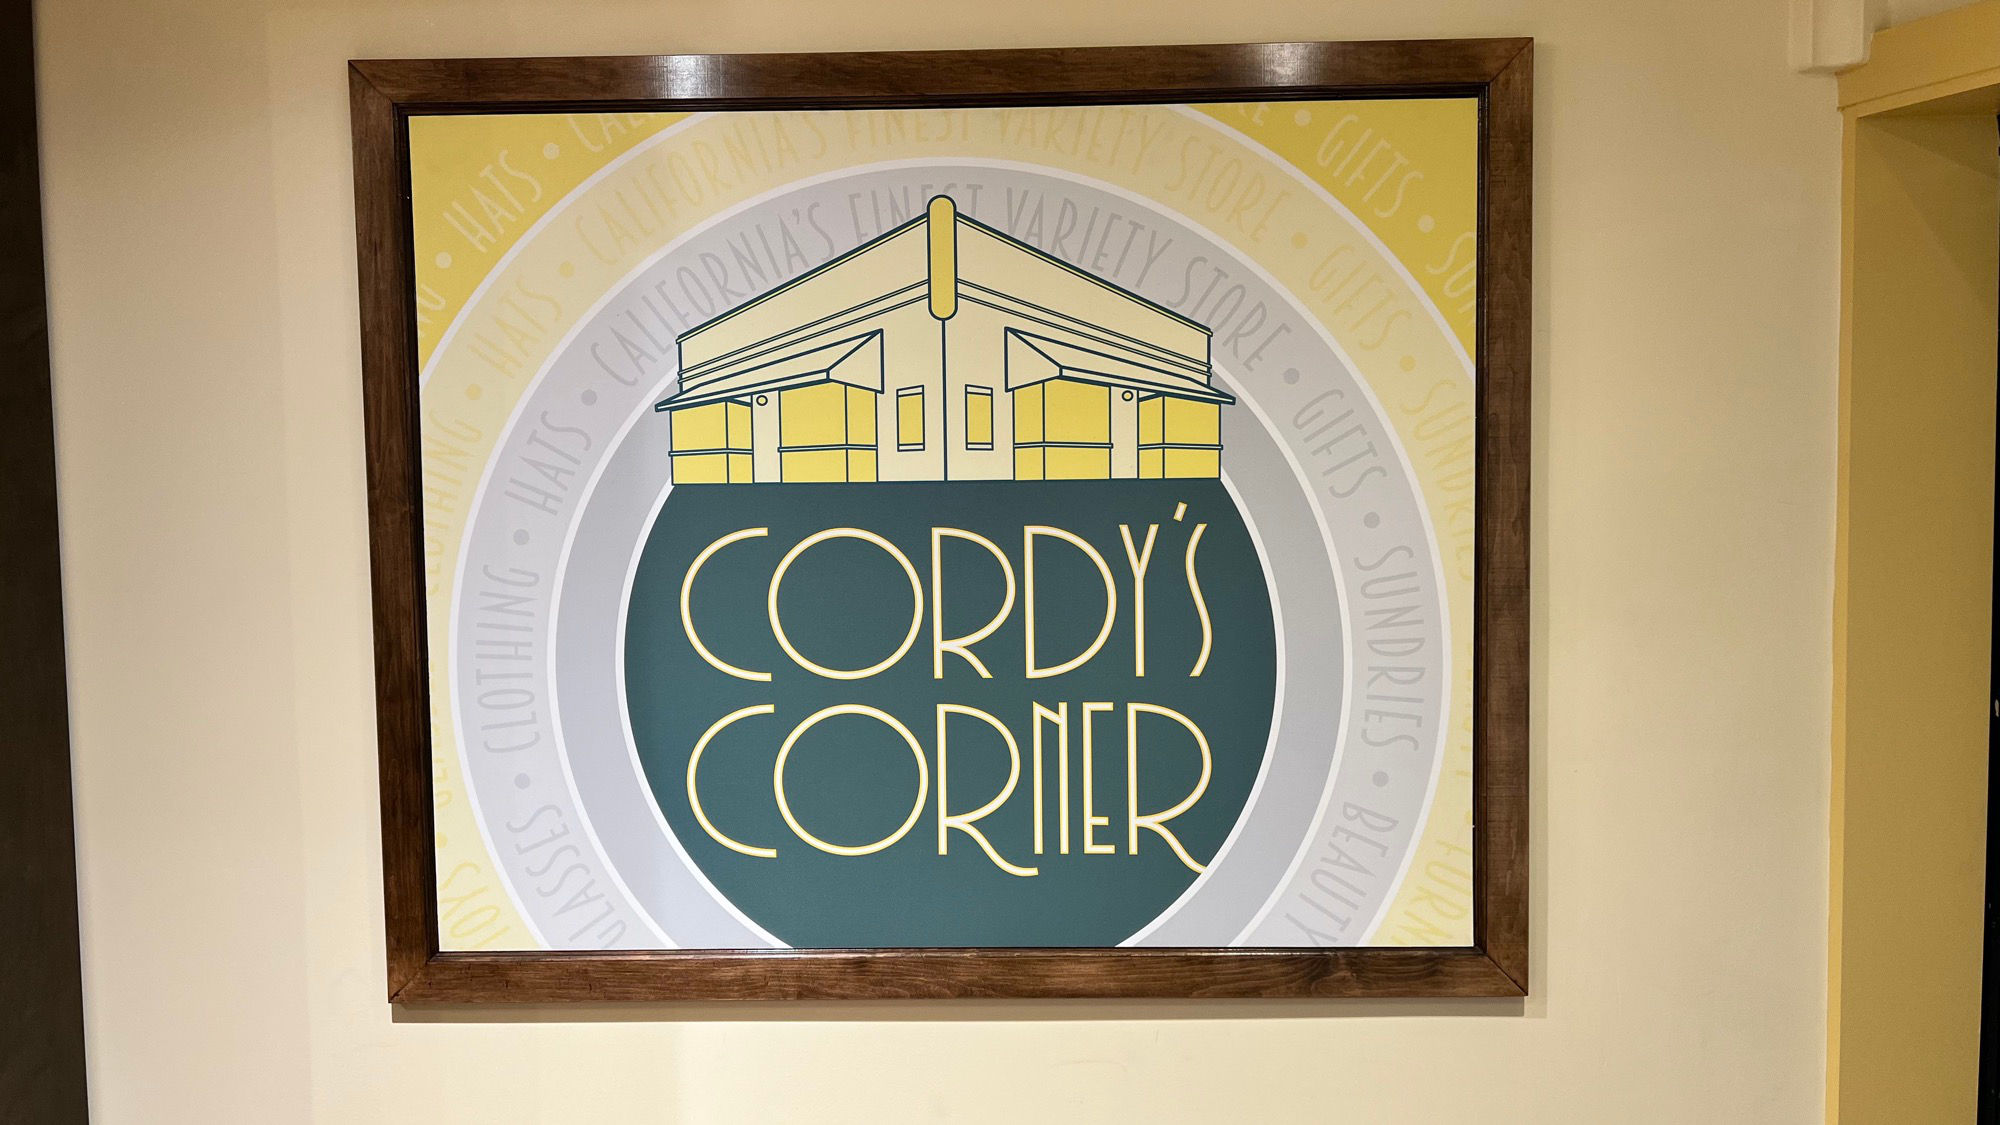 Cordy's Corner California's Finest Variety Store